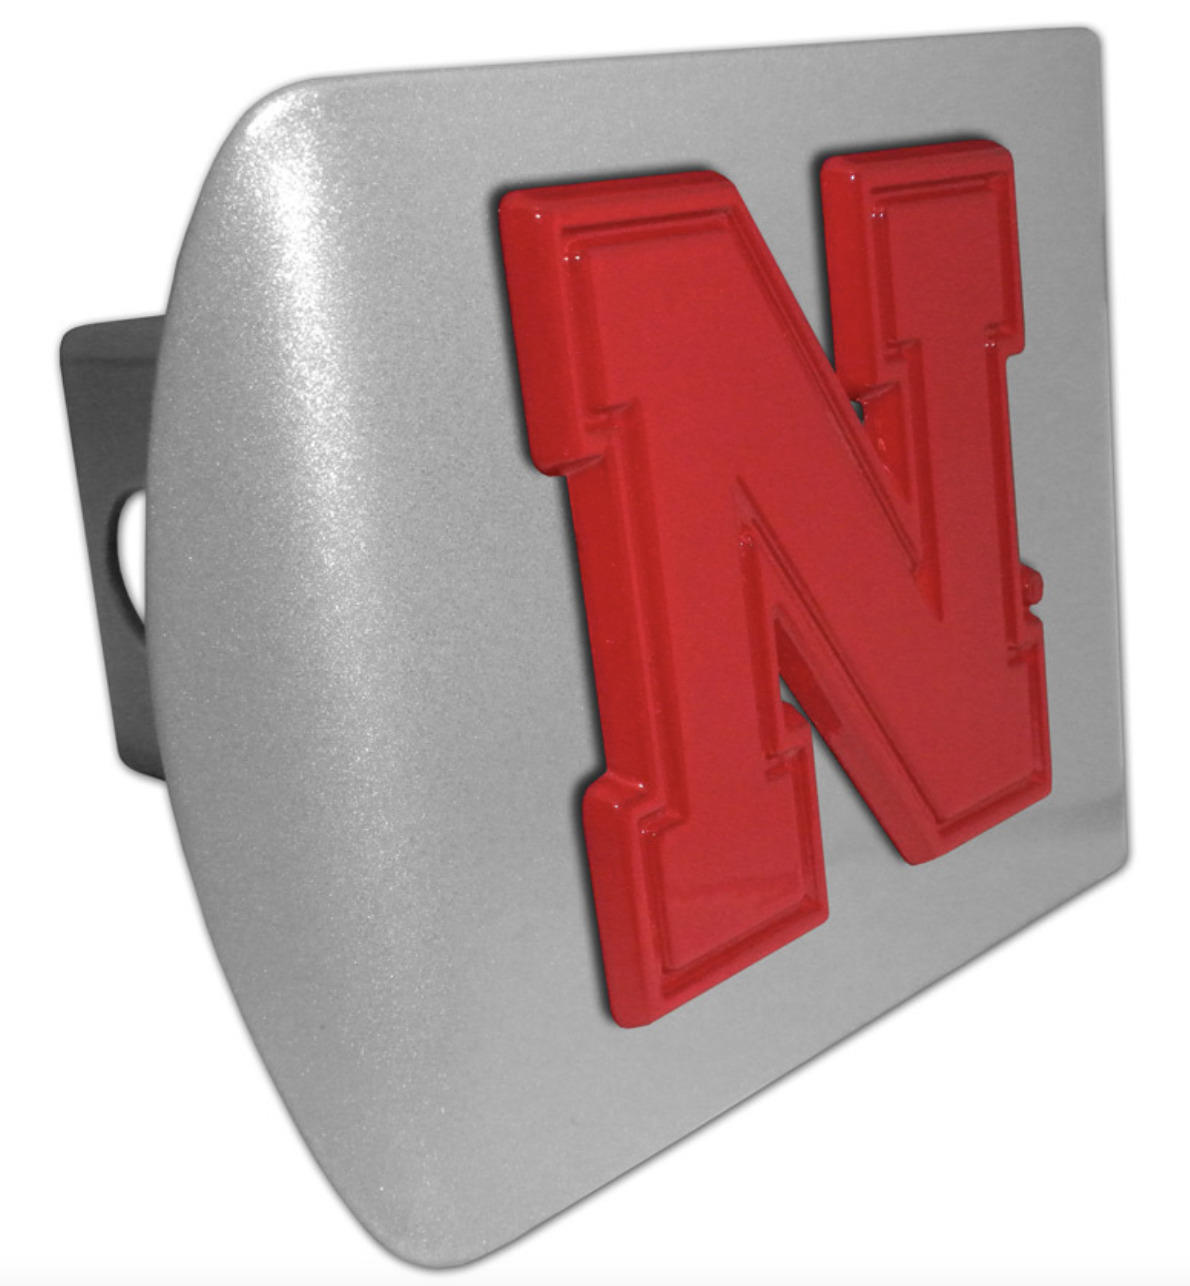 university of nebraska red emblem brushed chrome trailer hitch cover usa made